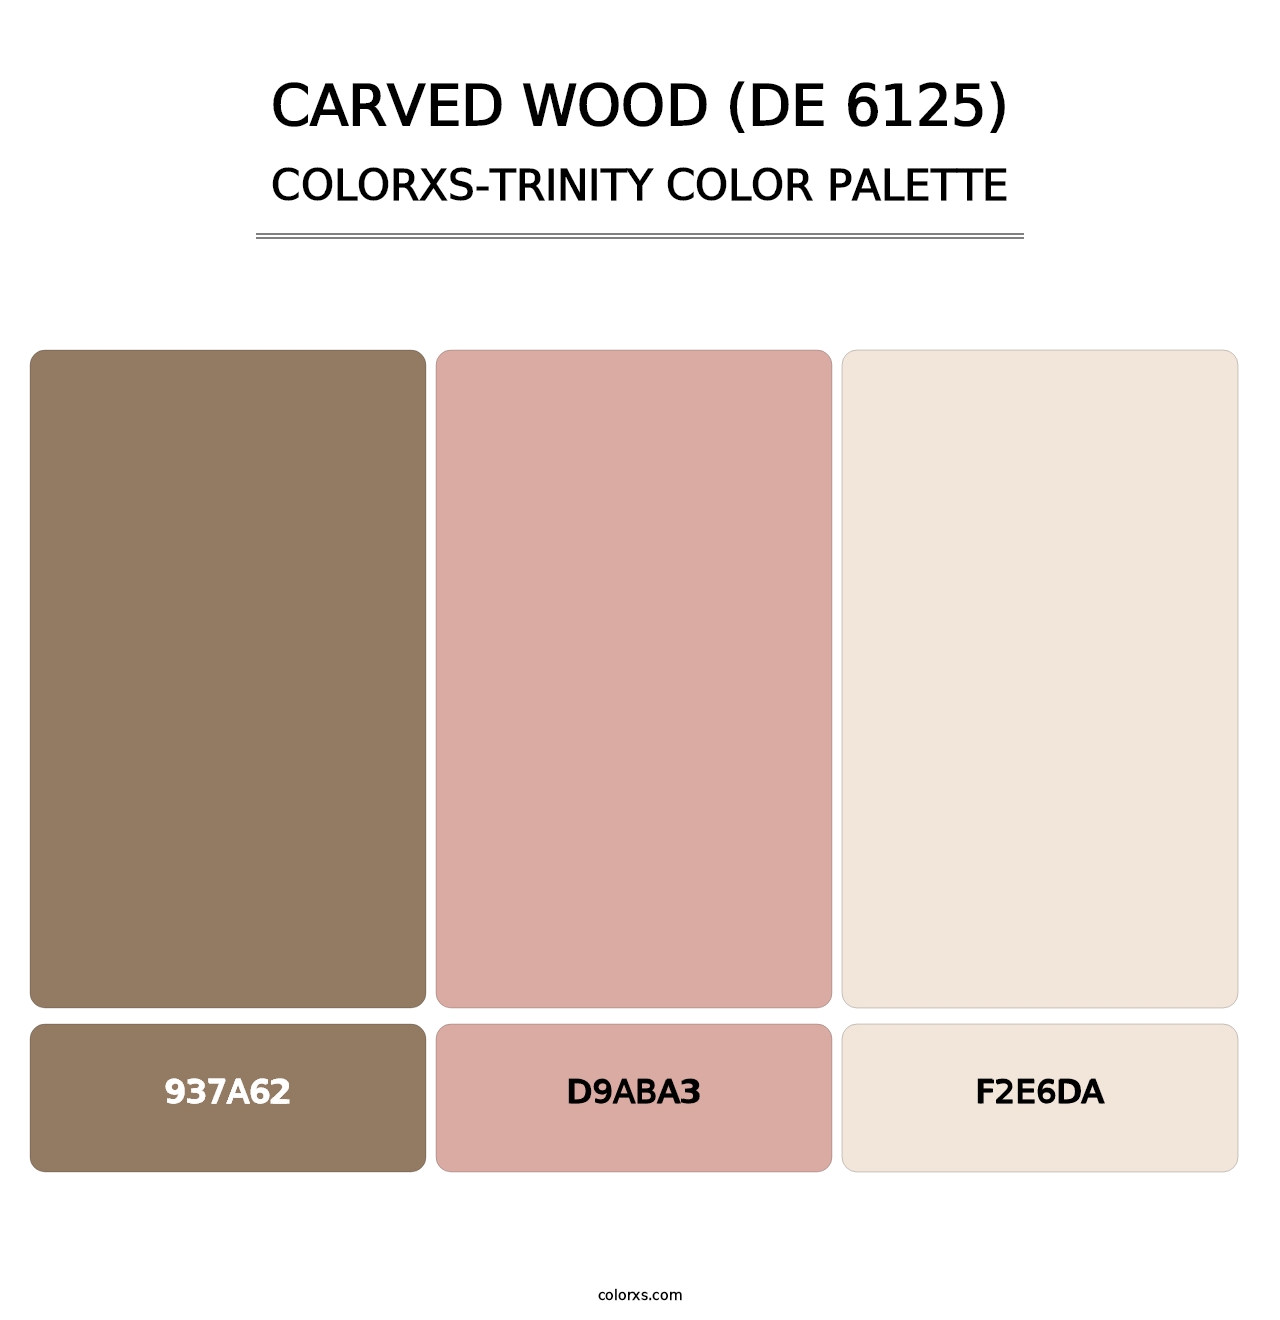 Carved Wood (DE 6125) - Colorxs Trinity Palette